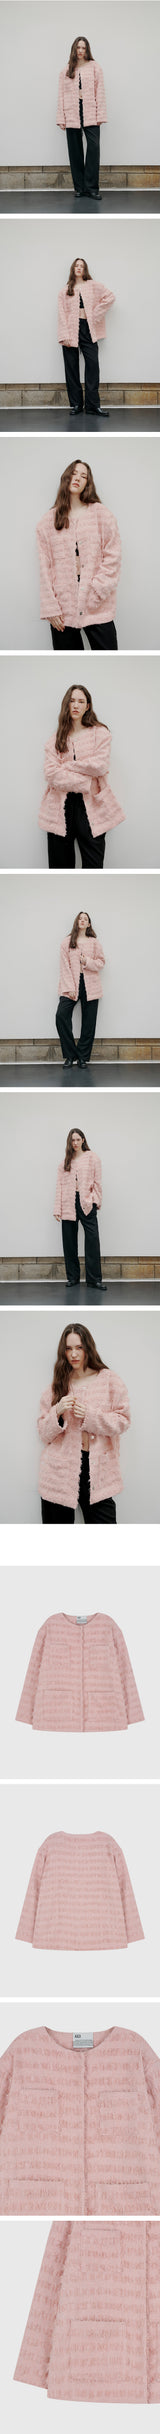 [Unisex] Over Fit Tweed Jacket Pink